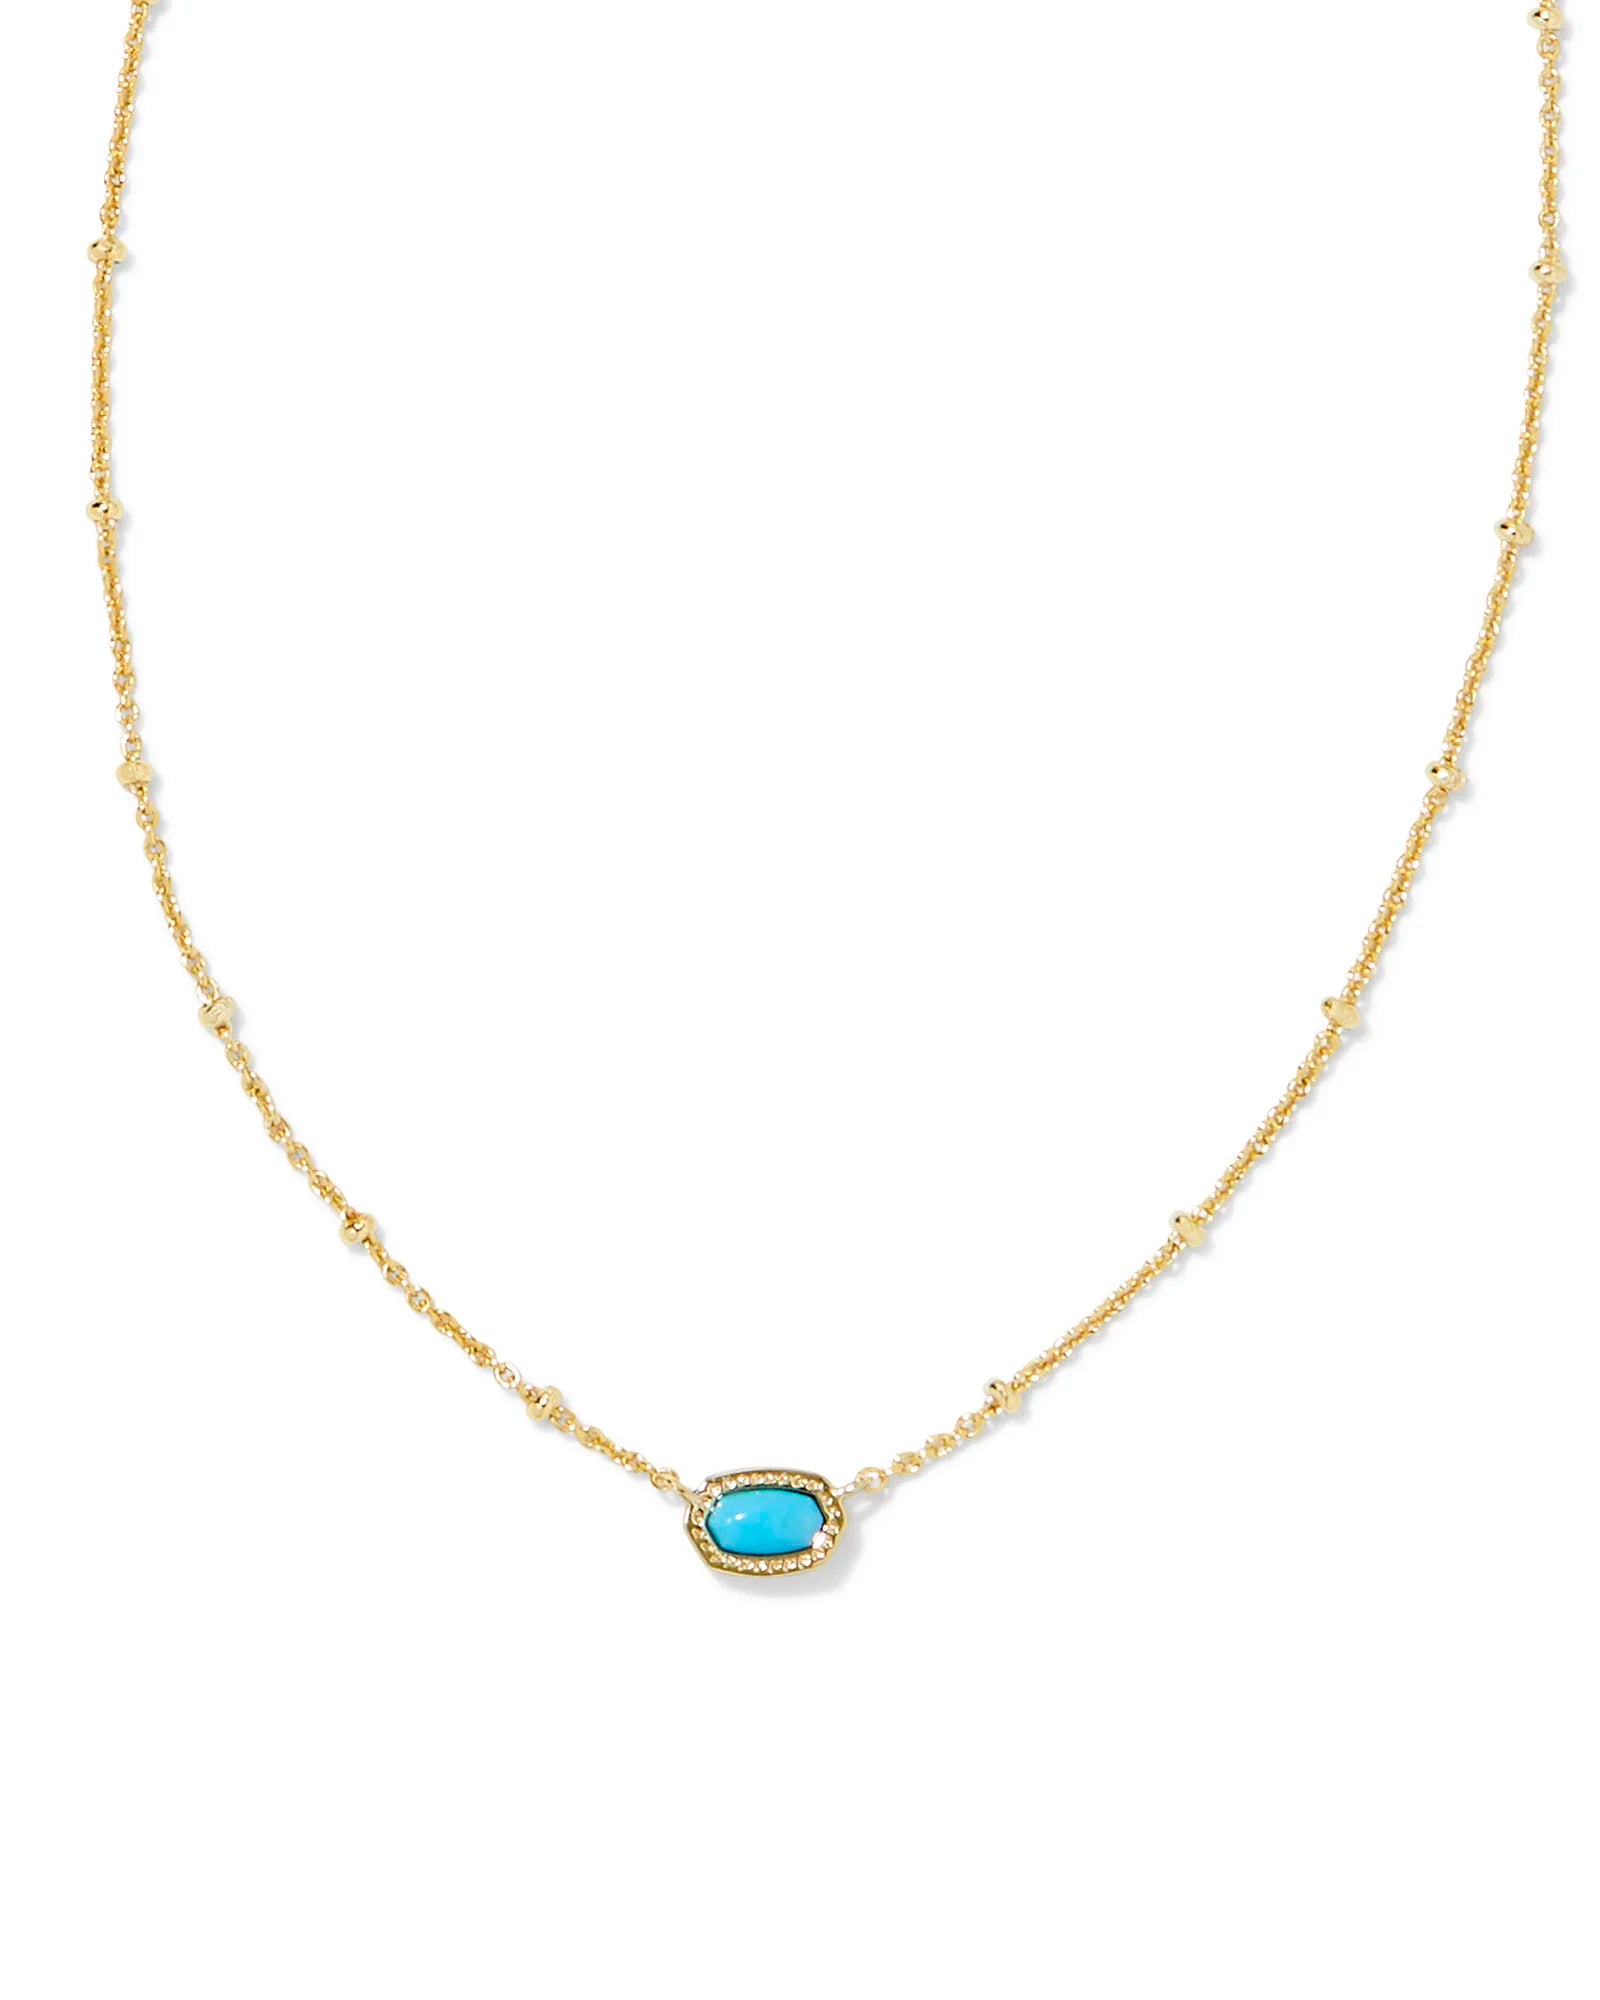 Kendra Scott |  Mini Elisa Gold Satellite Short Pendant Necklace in Turquoise Magnesite - Giddy Up Glamour Boutique